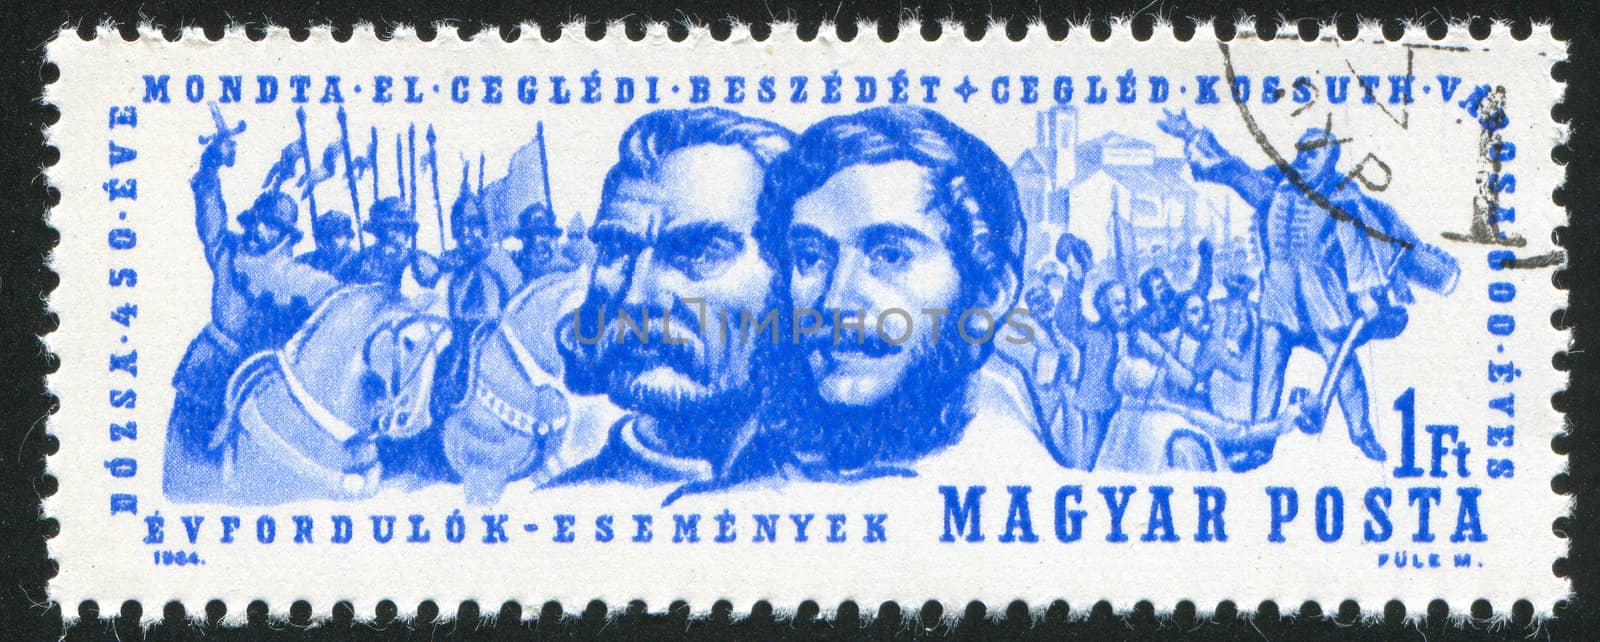 HUNGARY - CIRCA 1964: stamp printed by Hungary, shows Lajos Kossuth and Gyorgy Dozsa, circa 1964